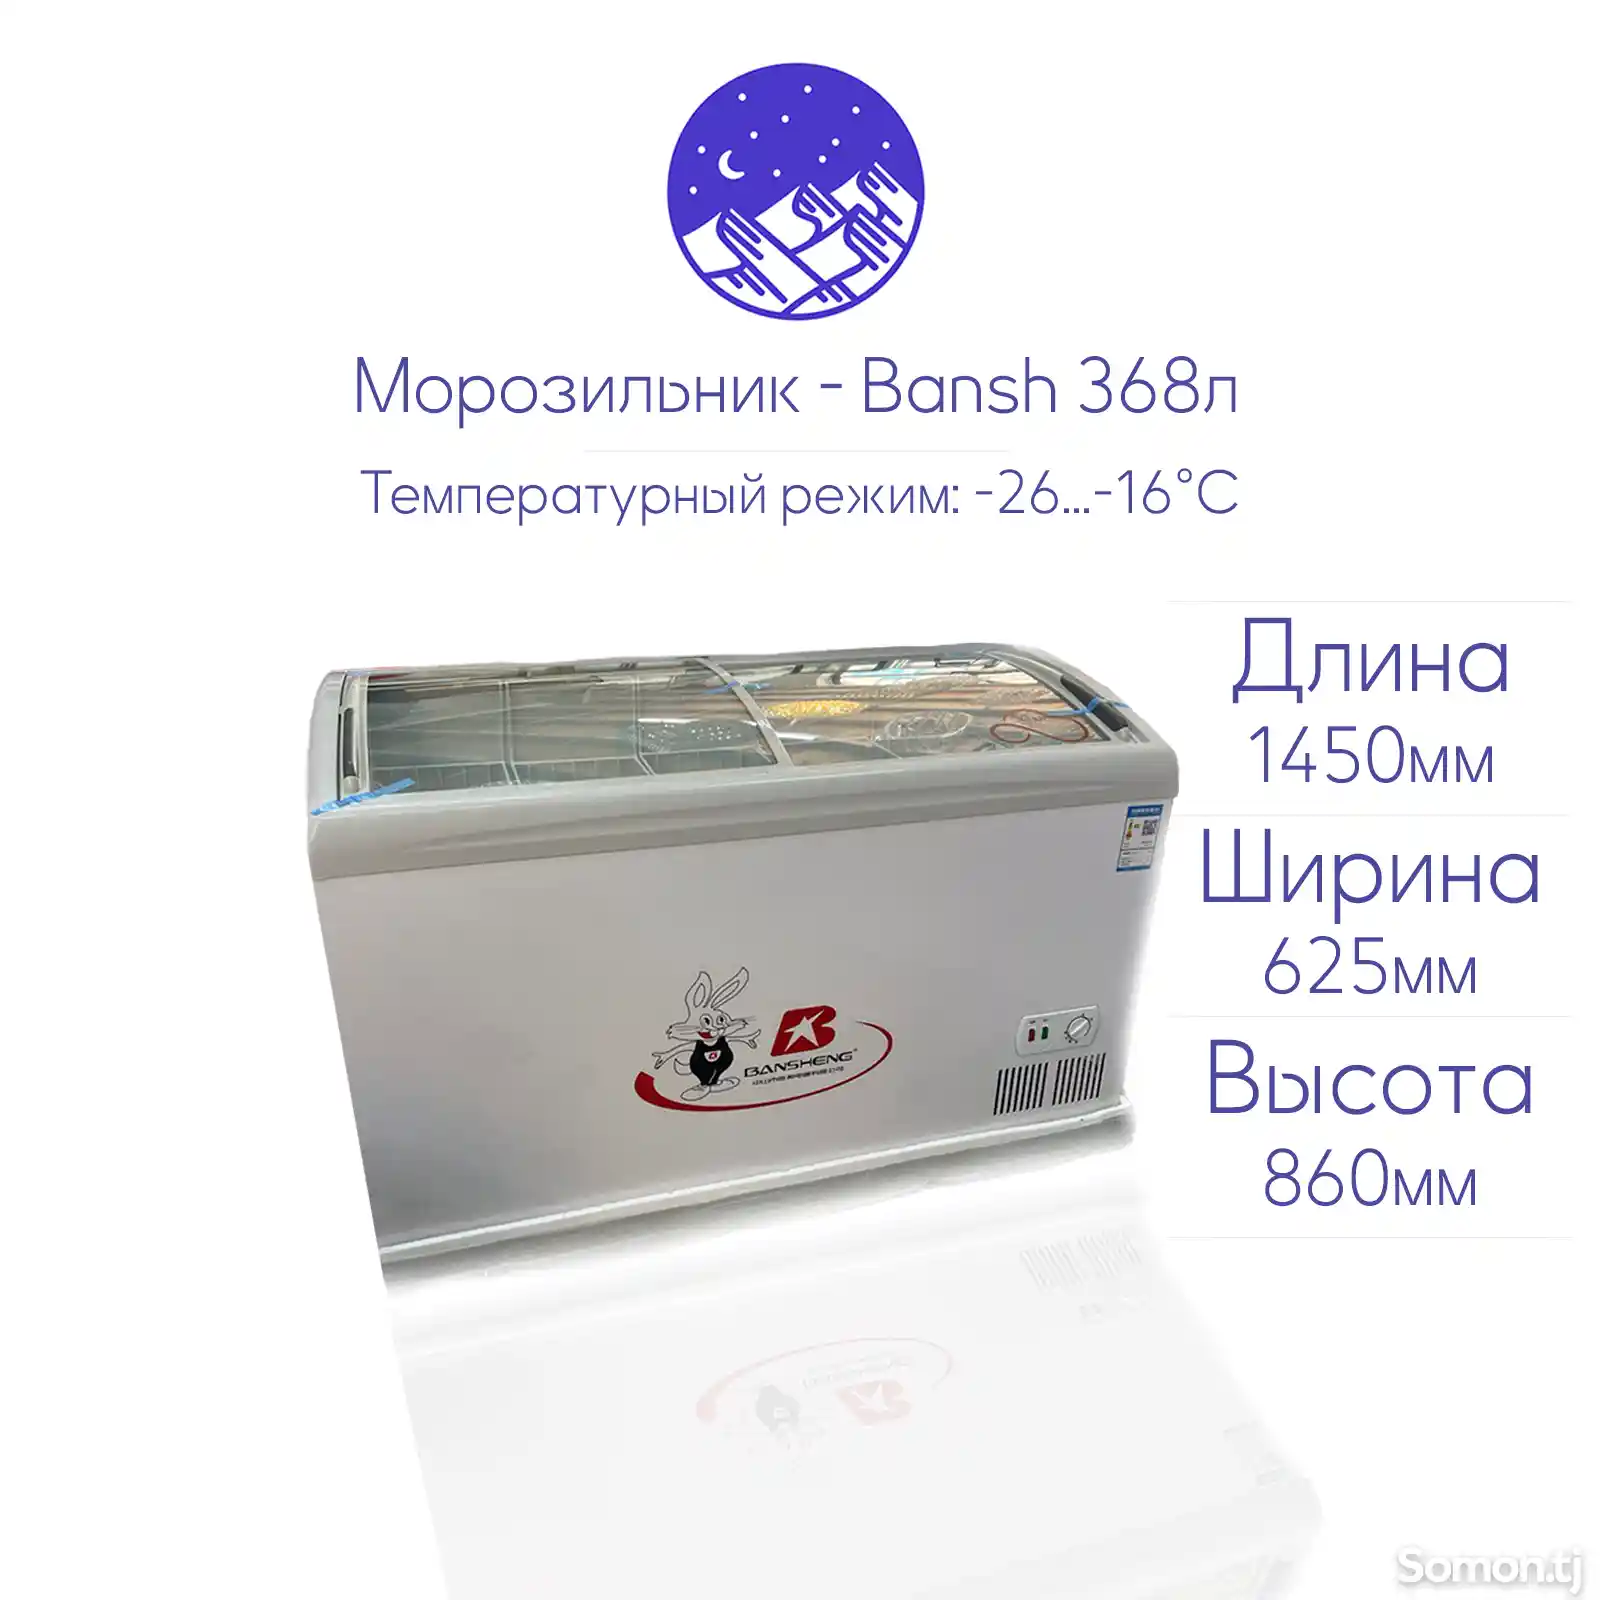 Морозильник Bansh - 368л-1